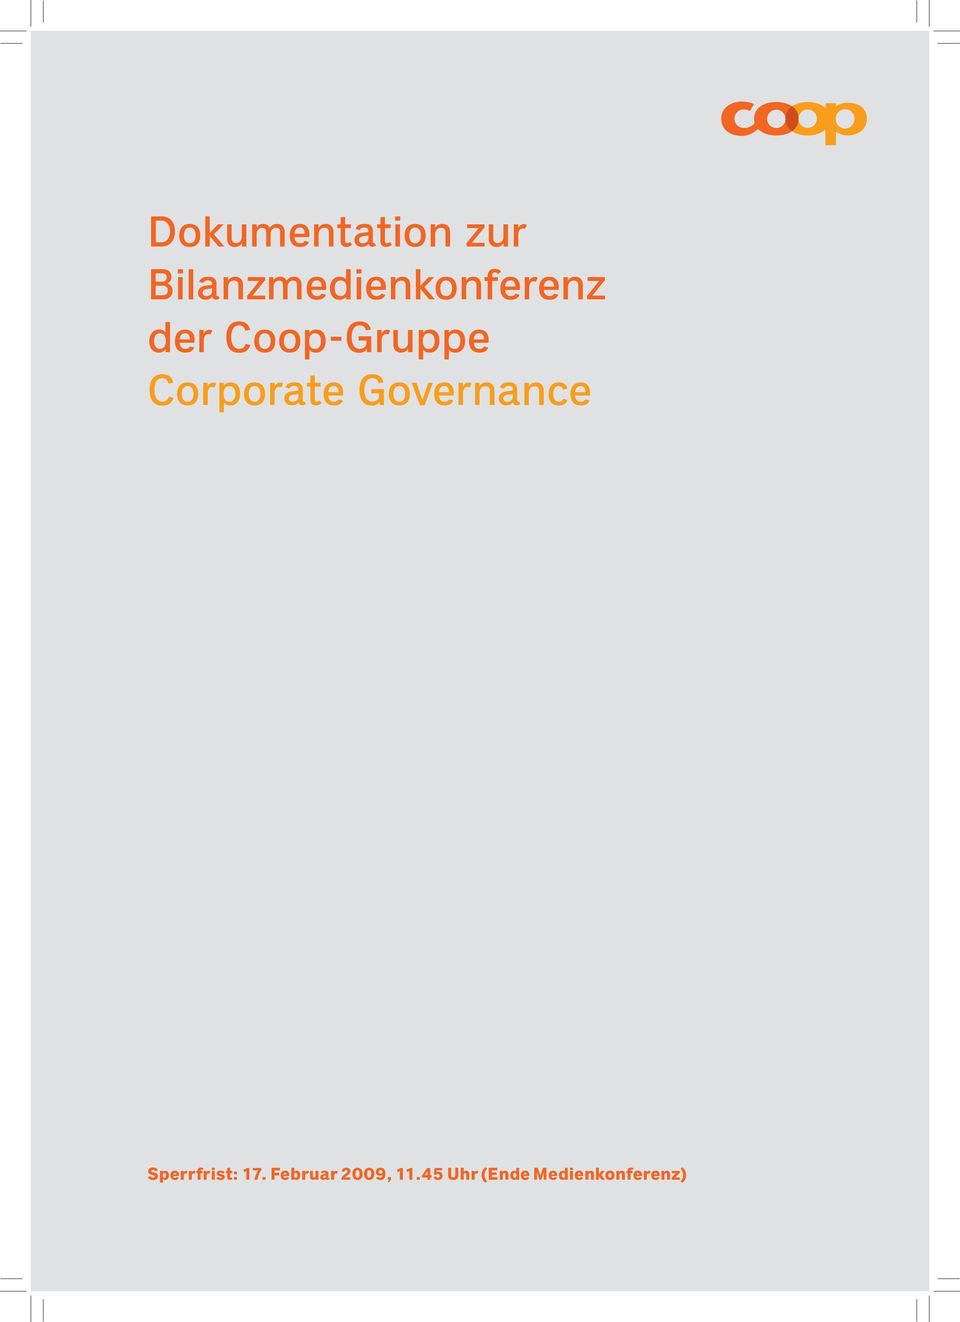 Coop-Gruppe Corporate Governance